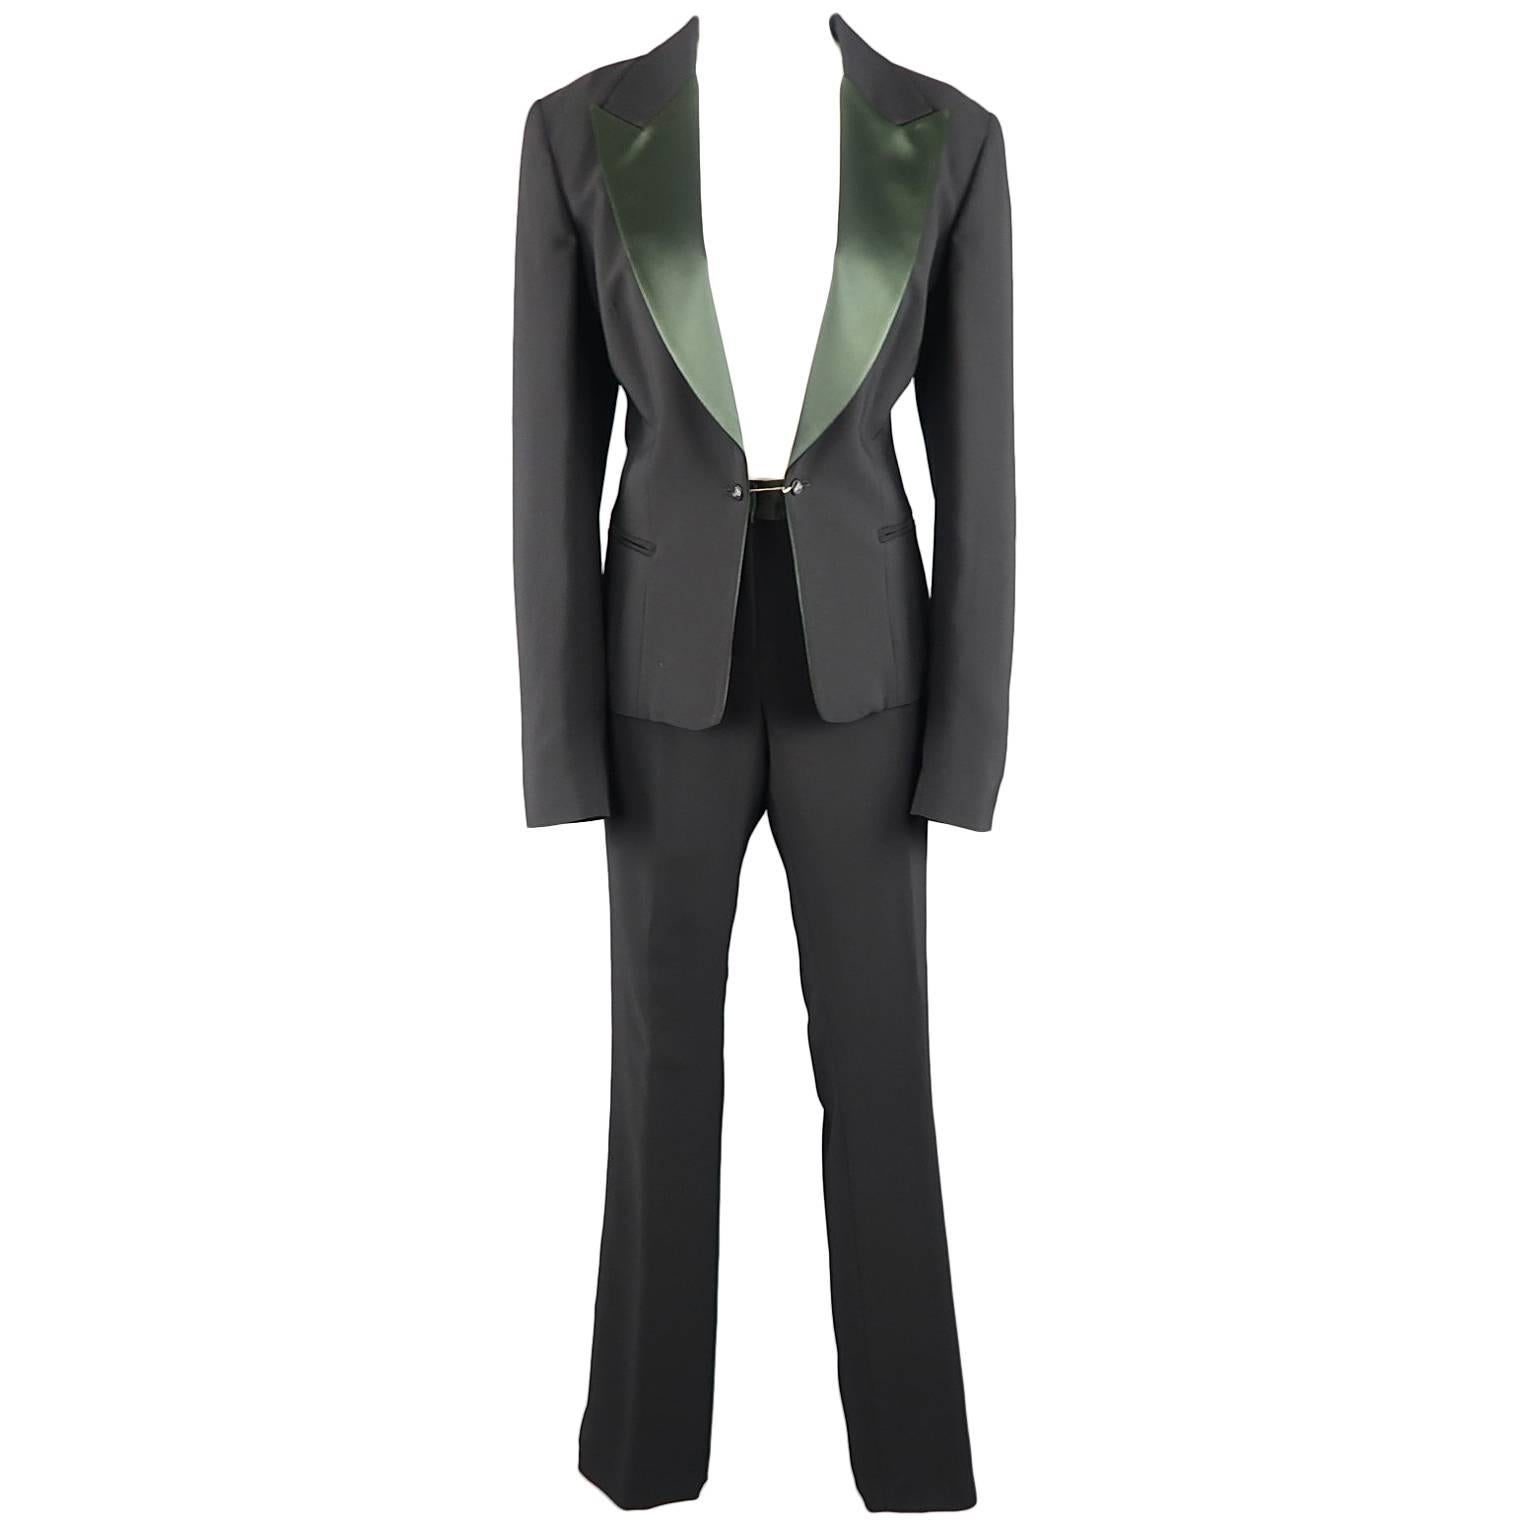 GIANFRANCO FERRE Size 10 Black & Green Peak Lapel Tuxedo Pants Suit